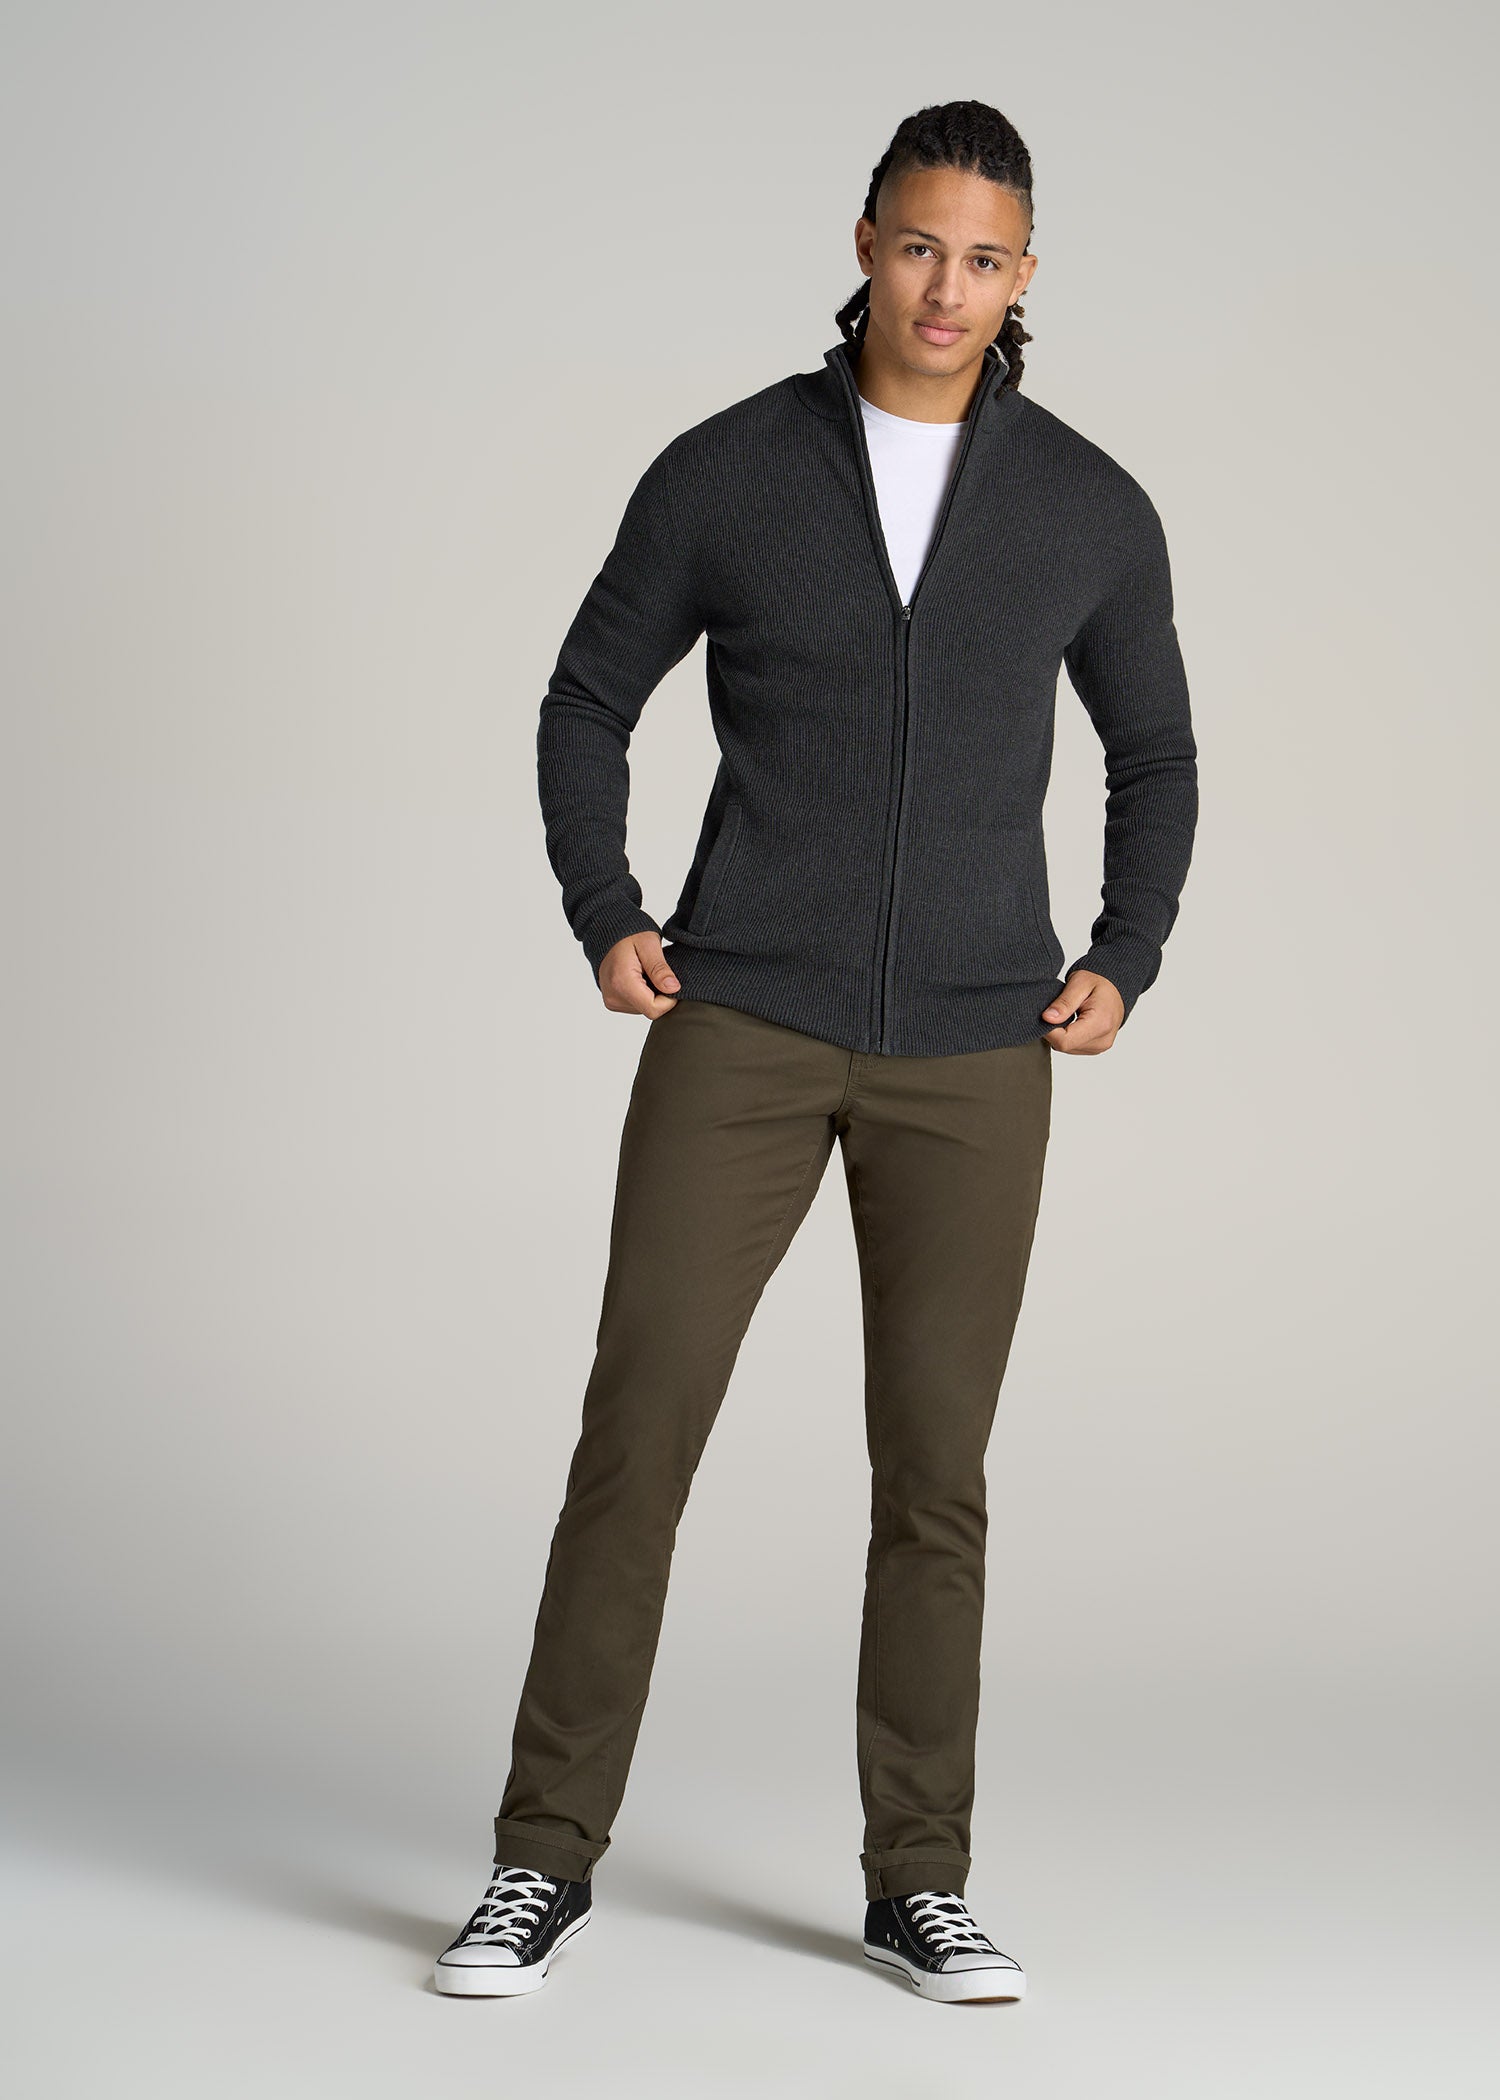 Men's Full Zip Sweater: Tall Full-Zip Charcoal Mix Sweater – American Tall